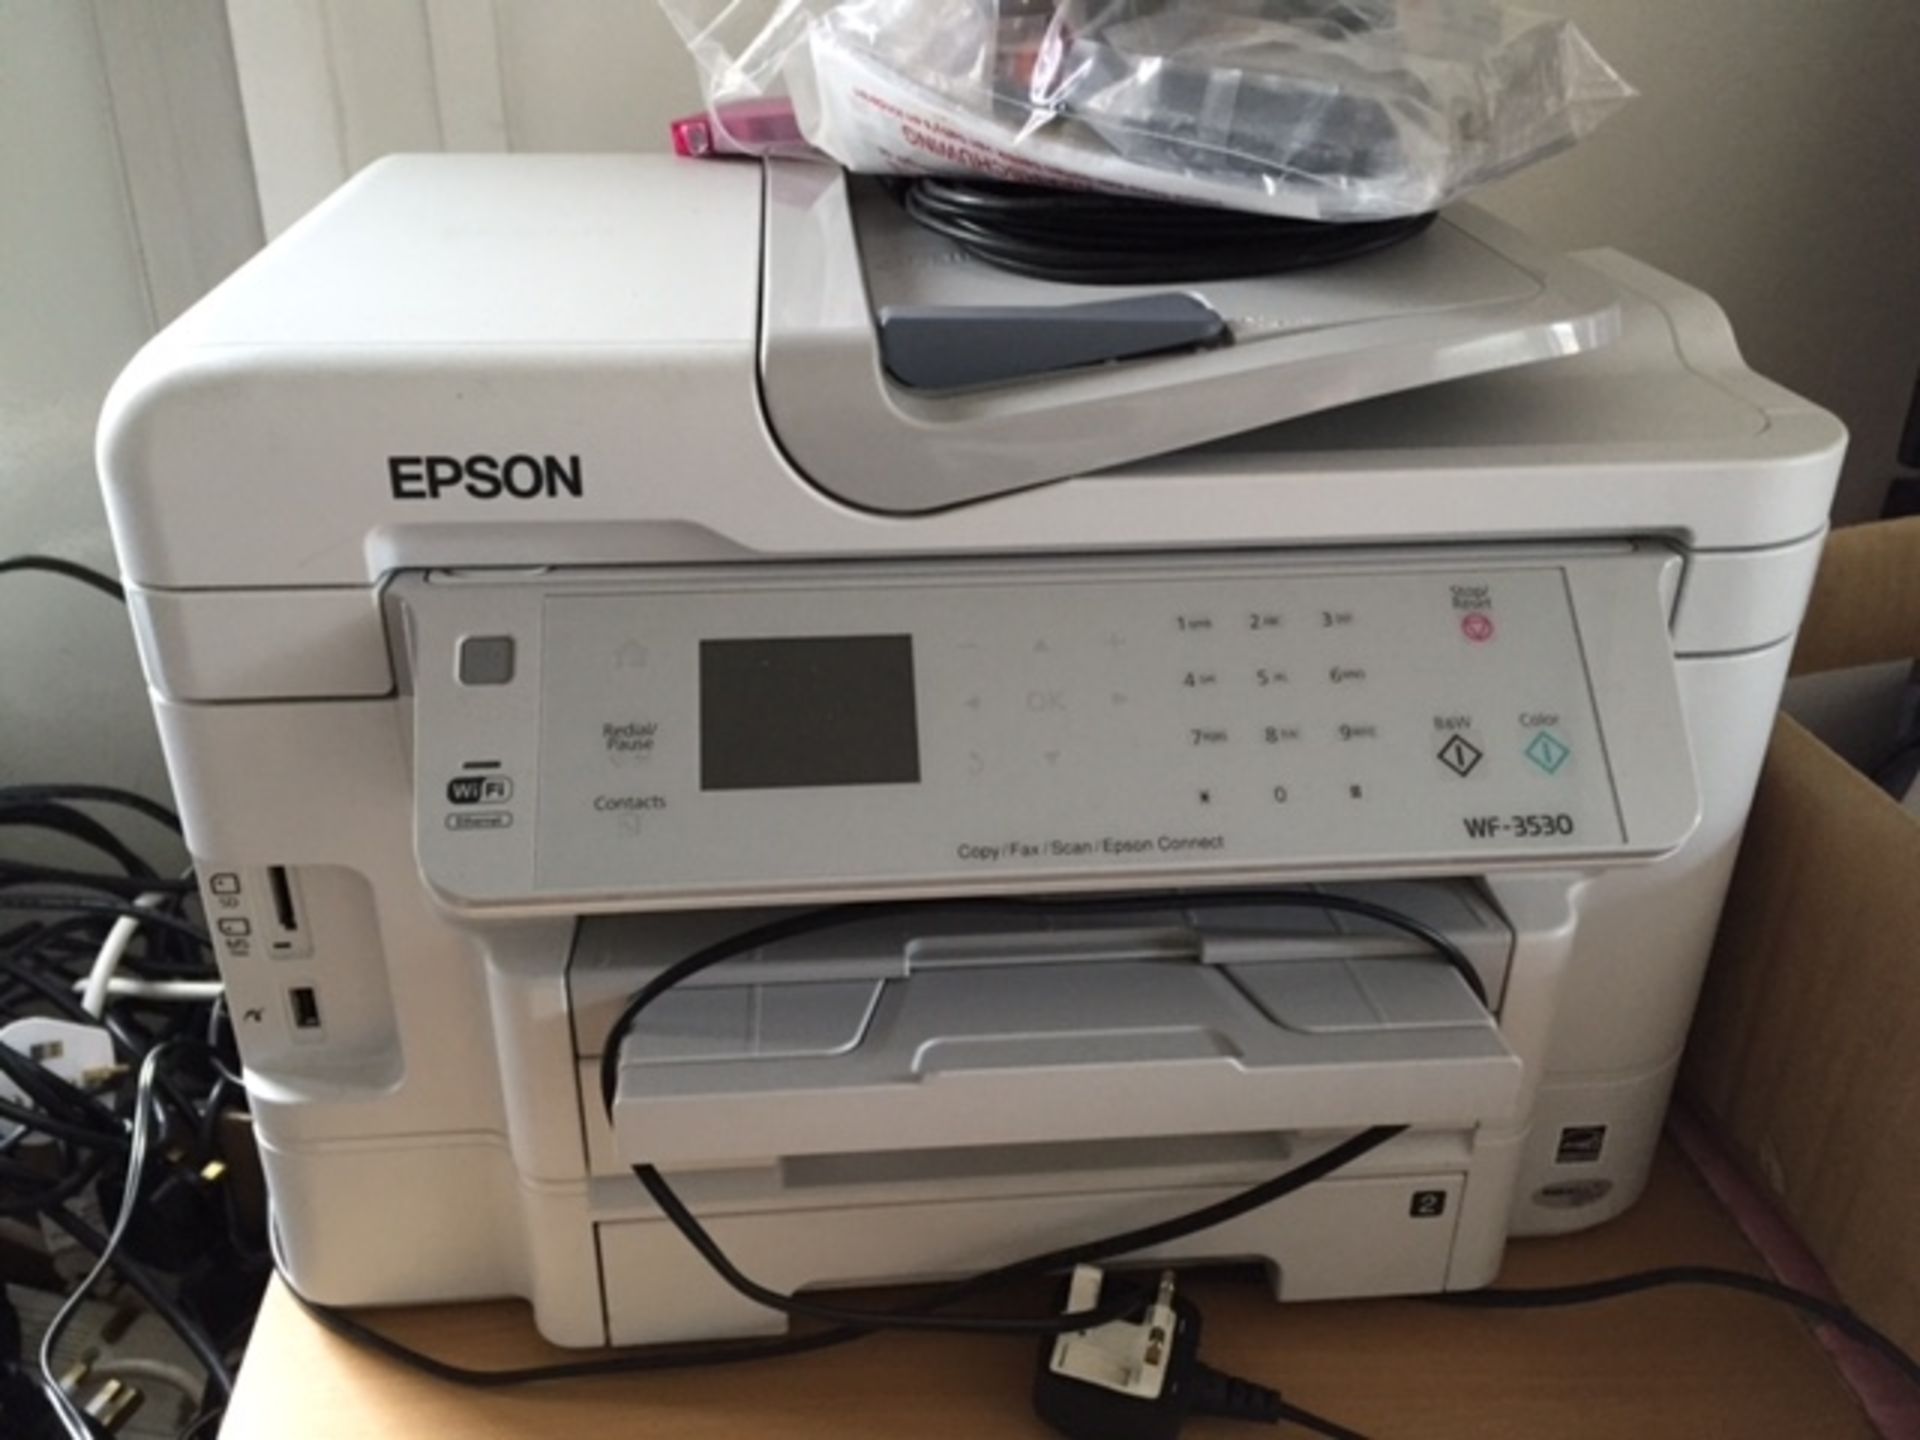 Epson Model WF3530 WiFi Printer As New ( With Supplies )